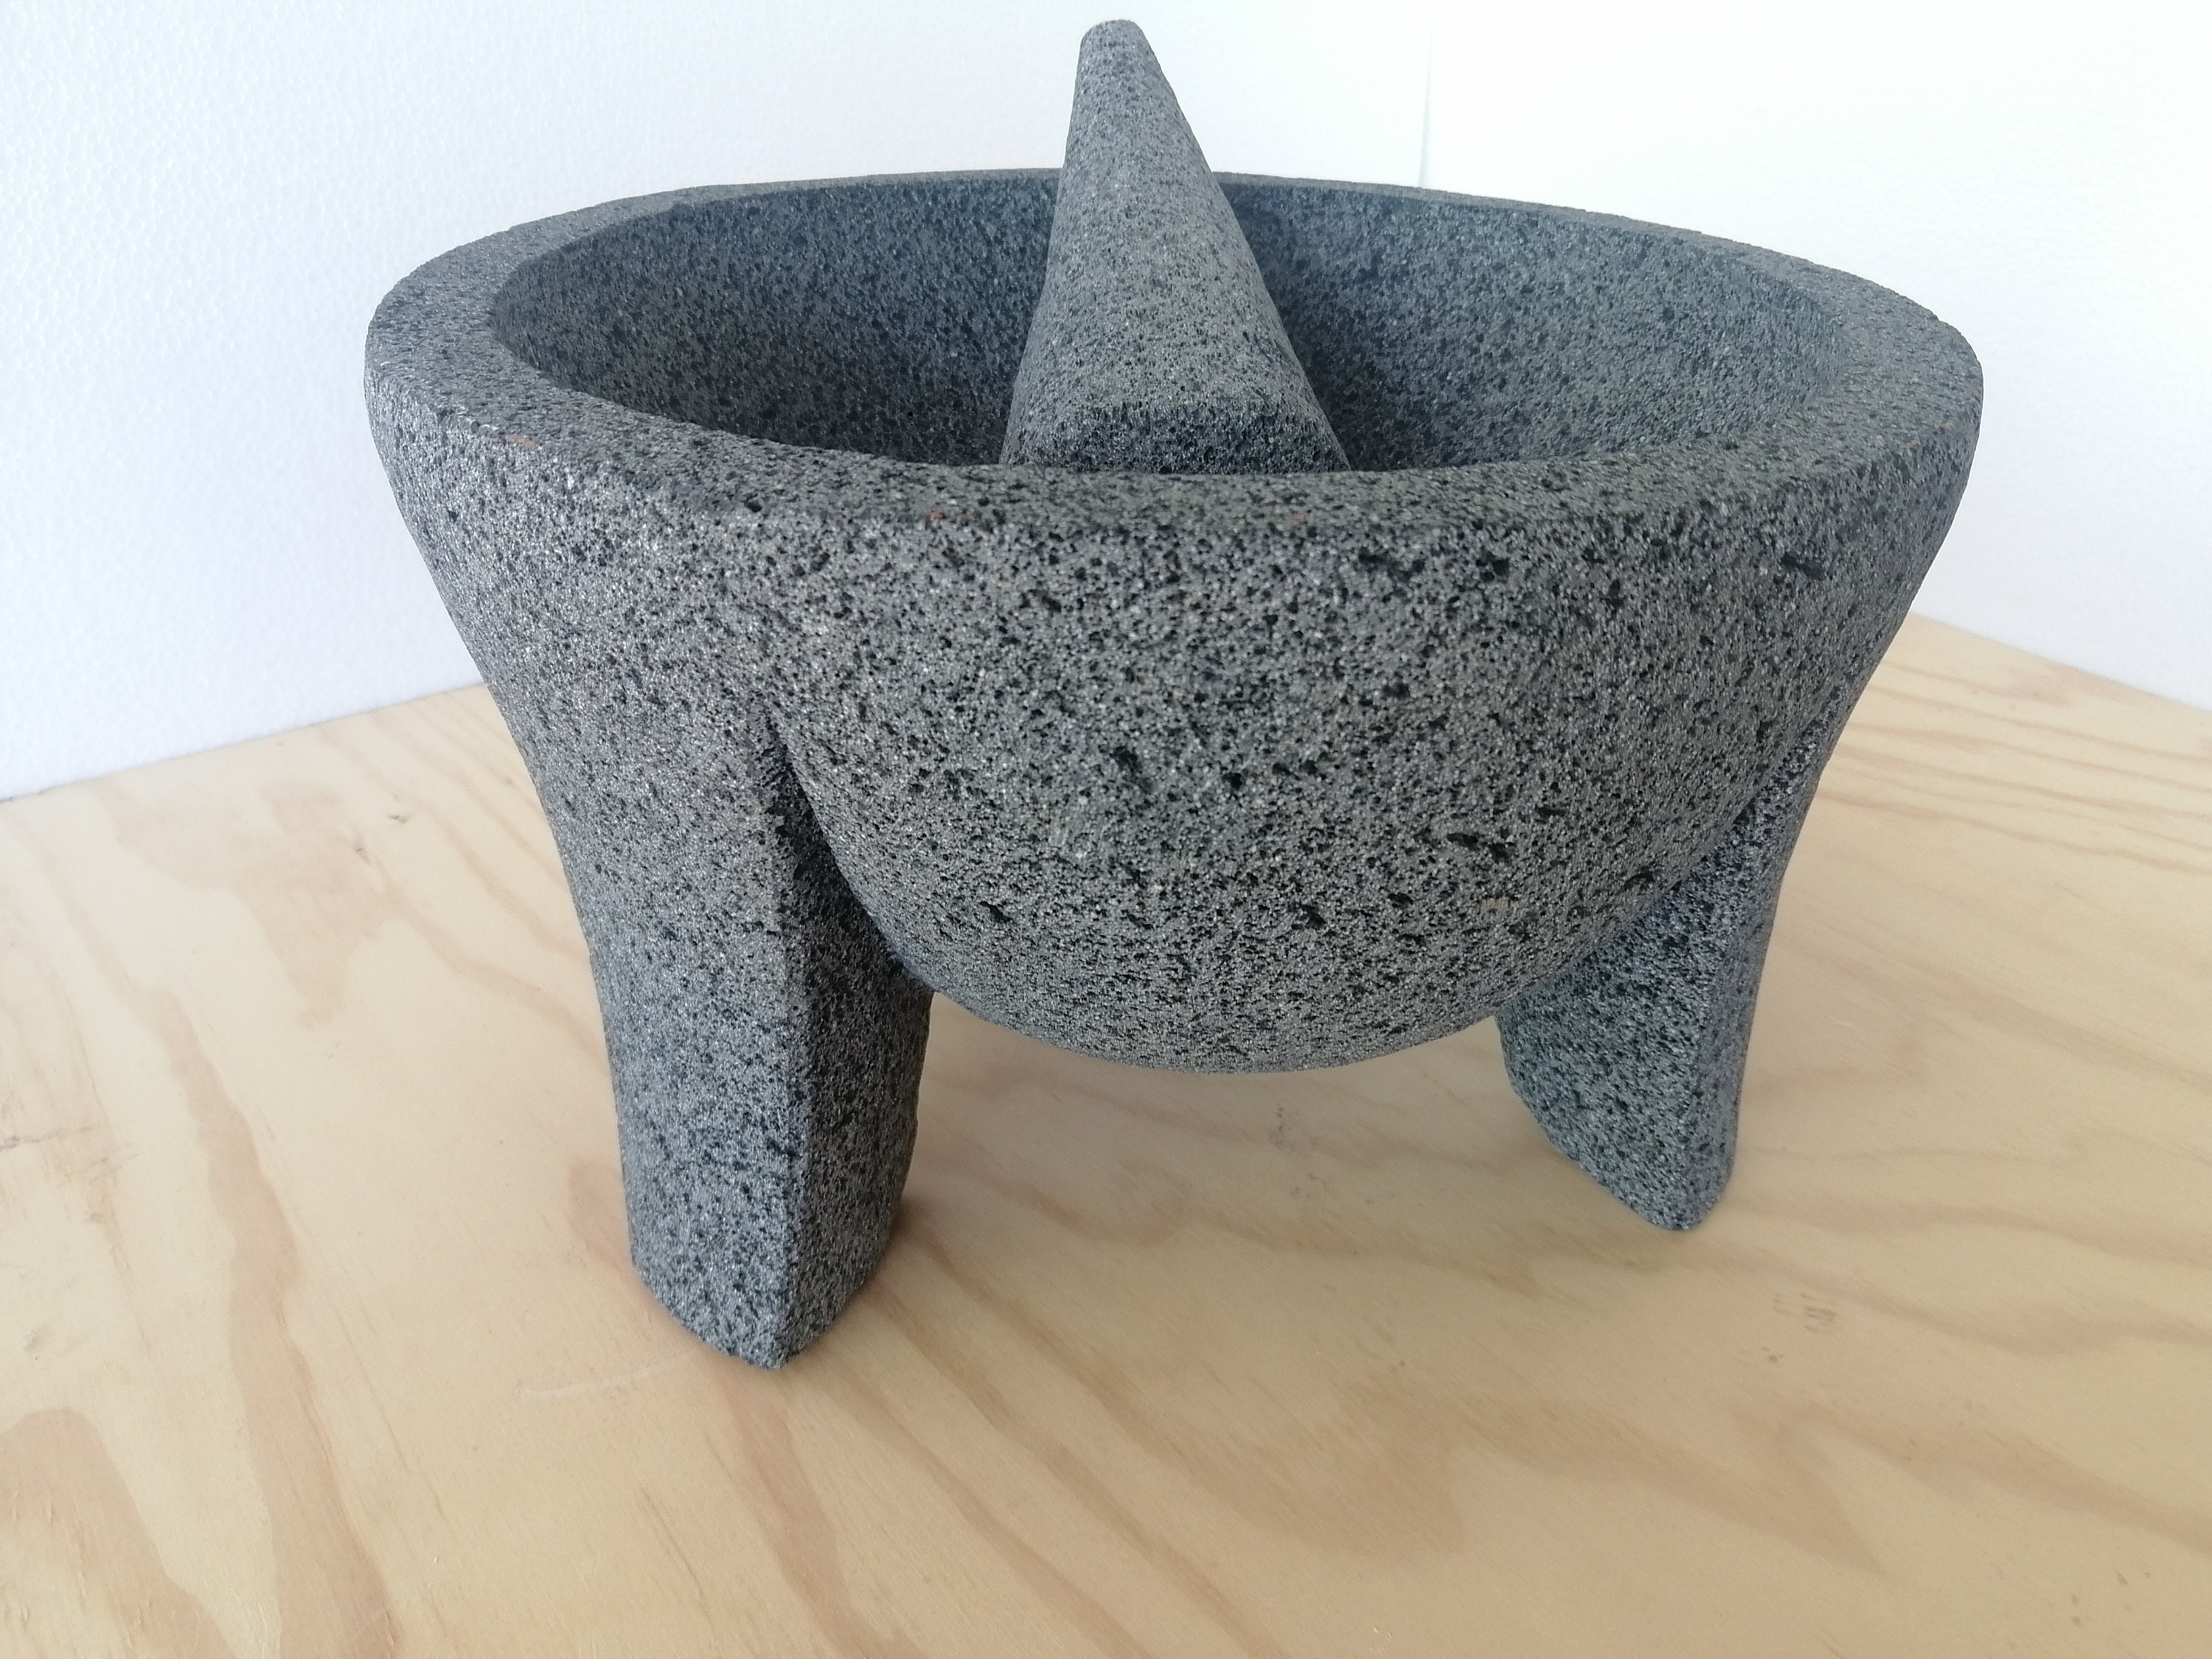 10 inch molcajete 25cm diameter handmade mexican mortar volcanic stone